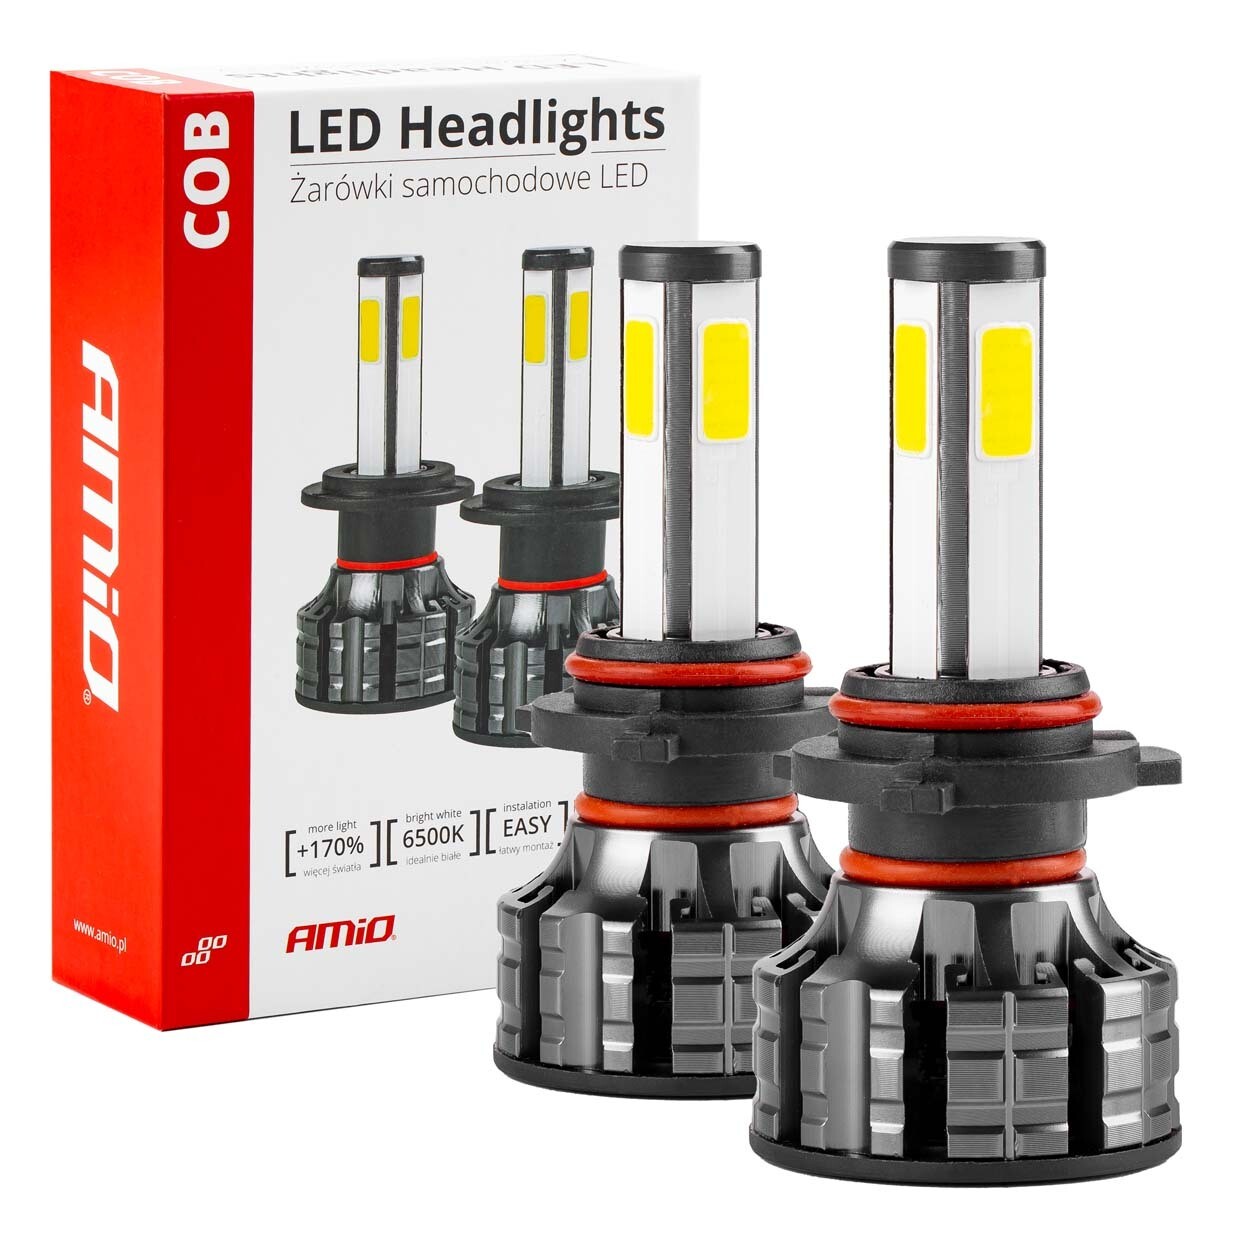 LED Headlight HB4 COB 4Side Series AMiO